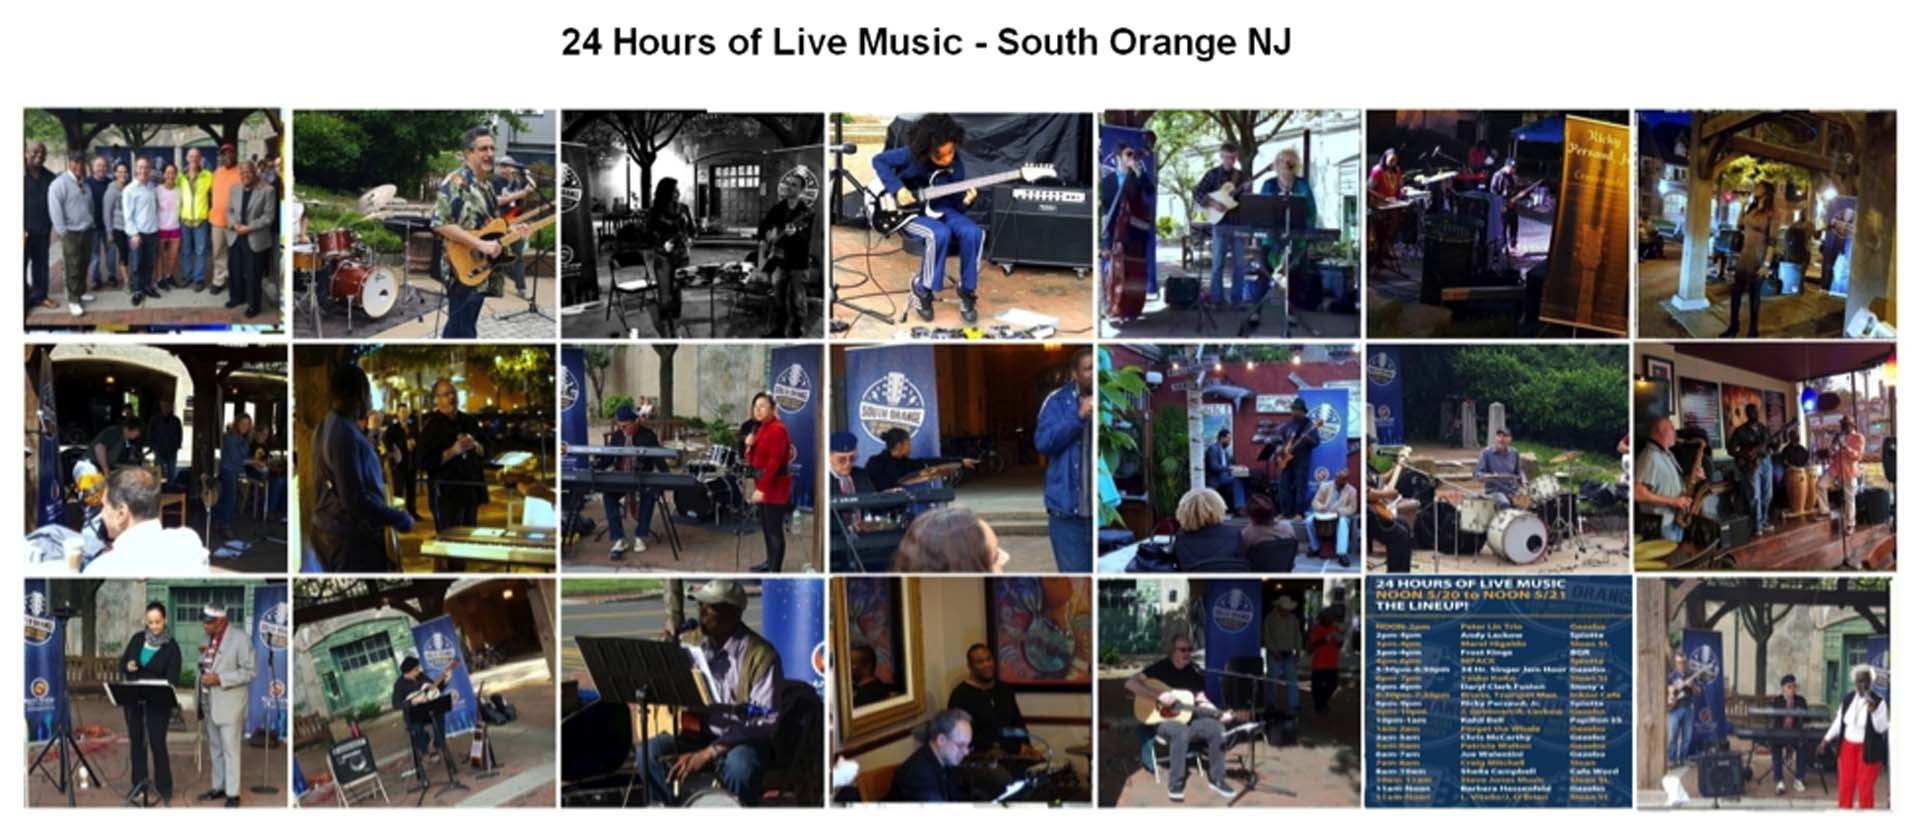 24 Hours of Live Music South Orange NJ.jpg